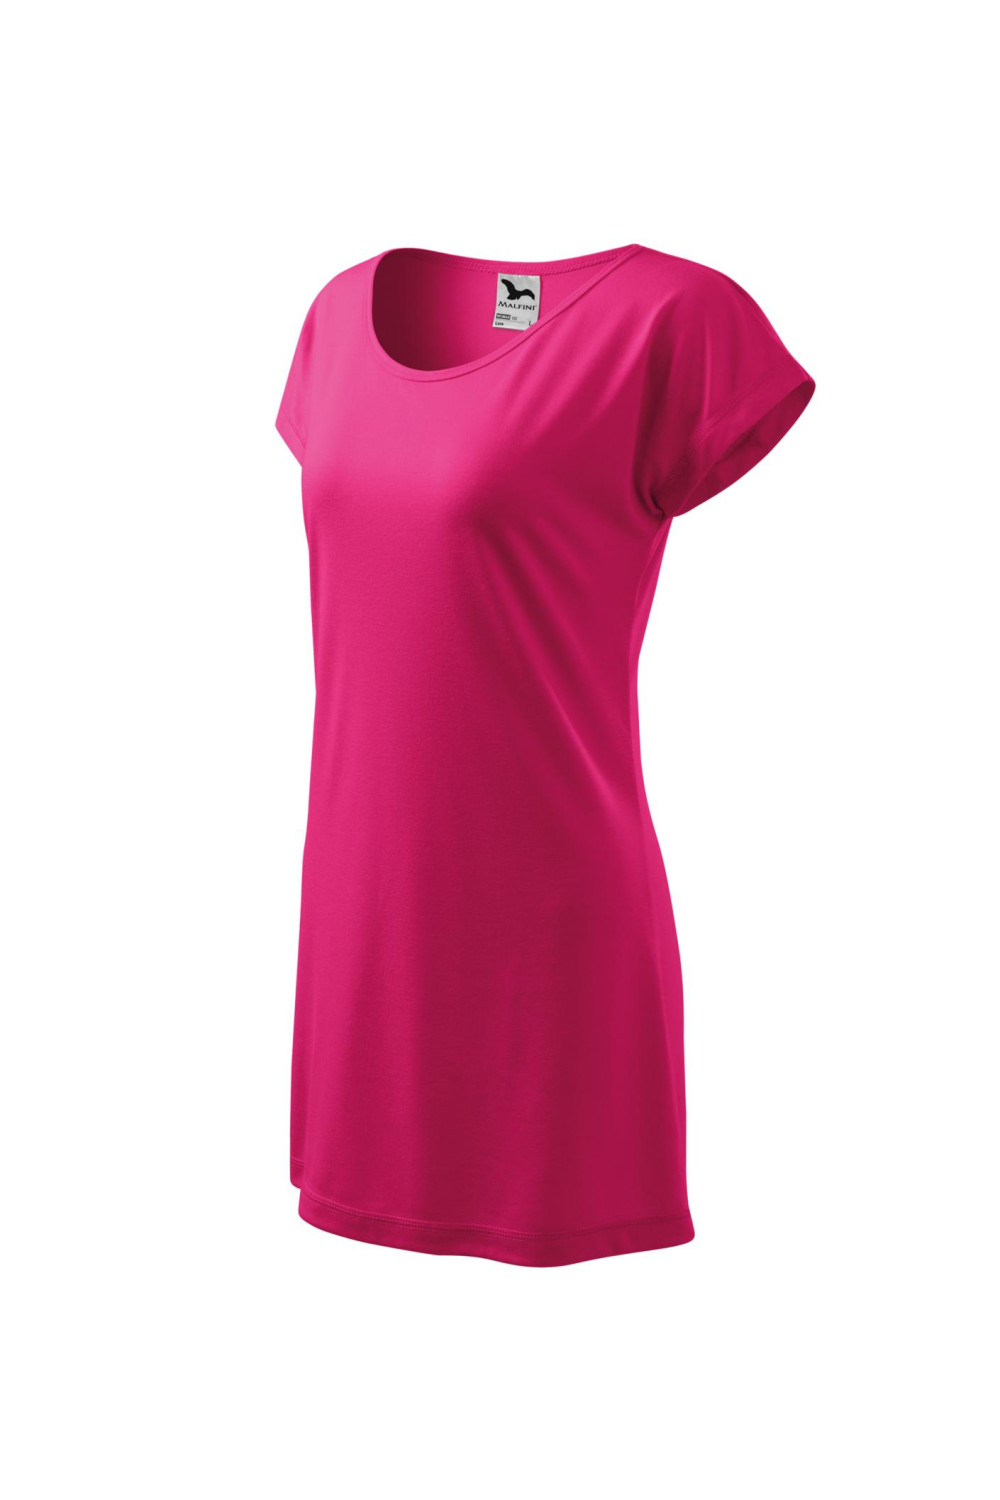 Koszulka/sukienka 123 LOVE koszulki / T-shirt /  czerwień purpurowa